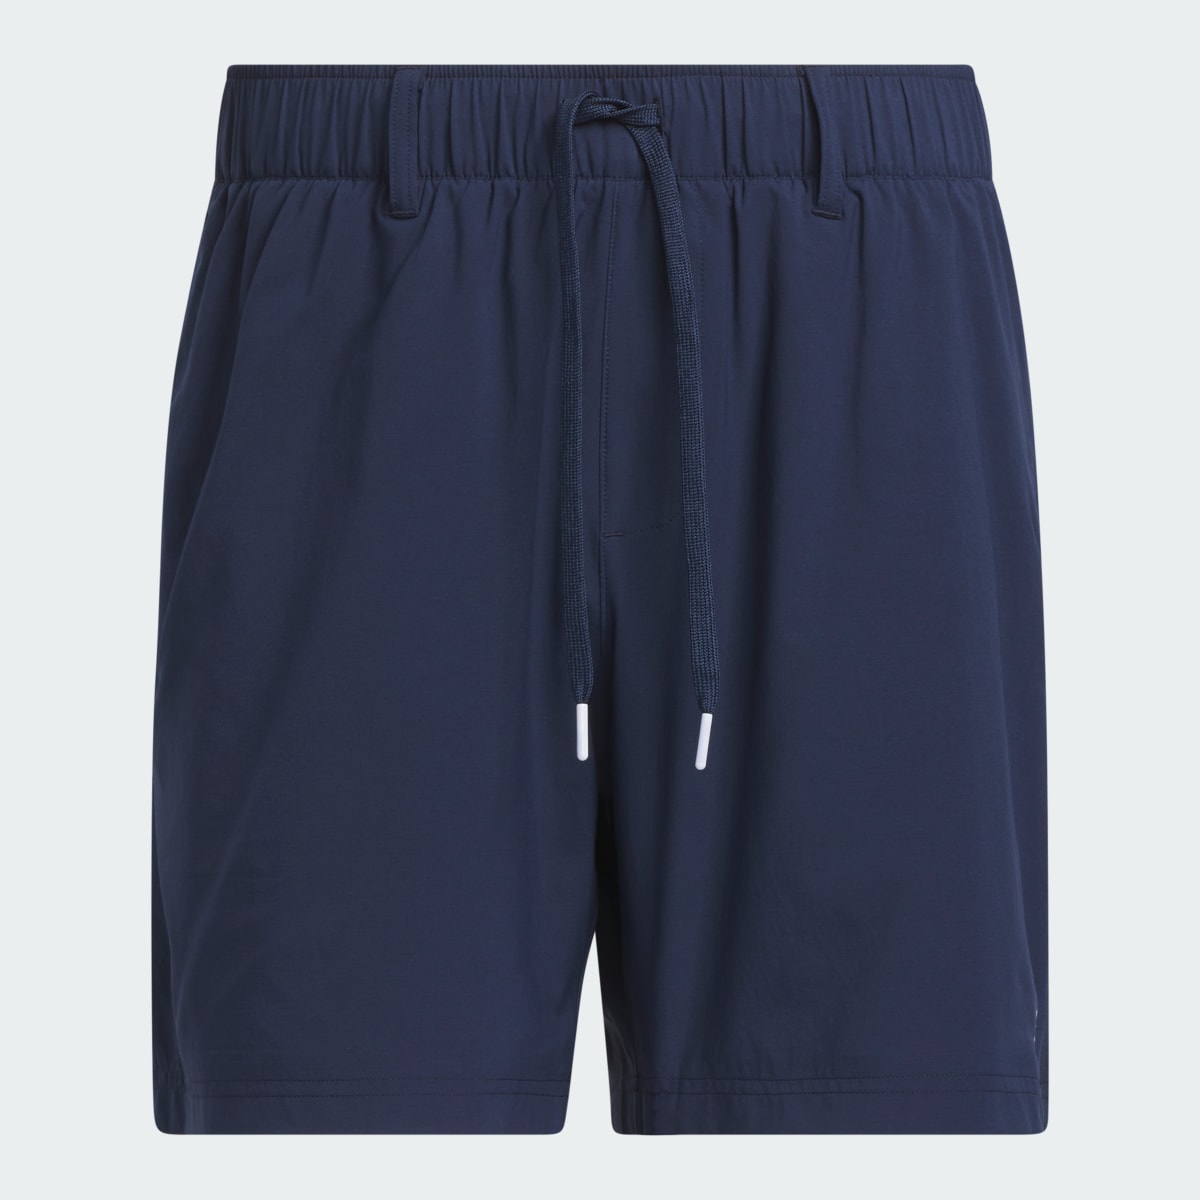 Adidas Ultimate365 Shorts. 4